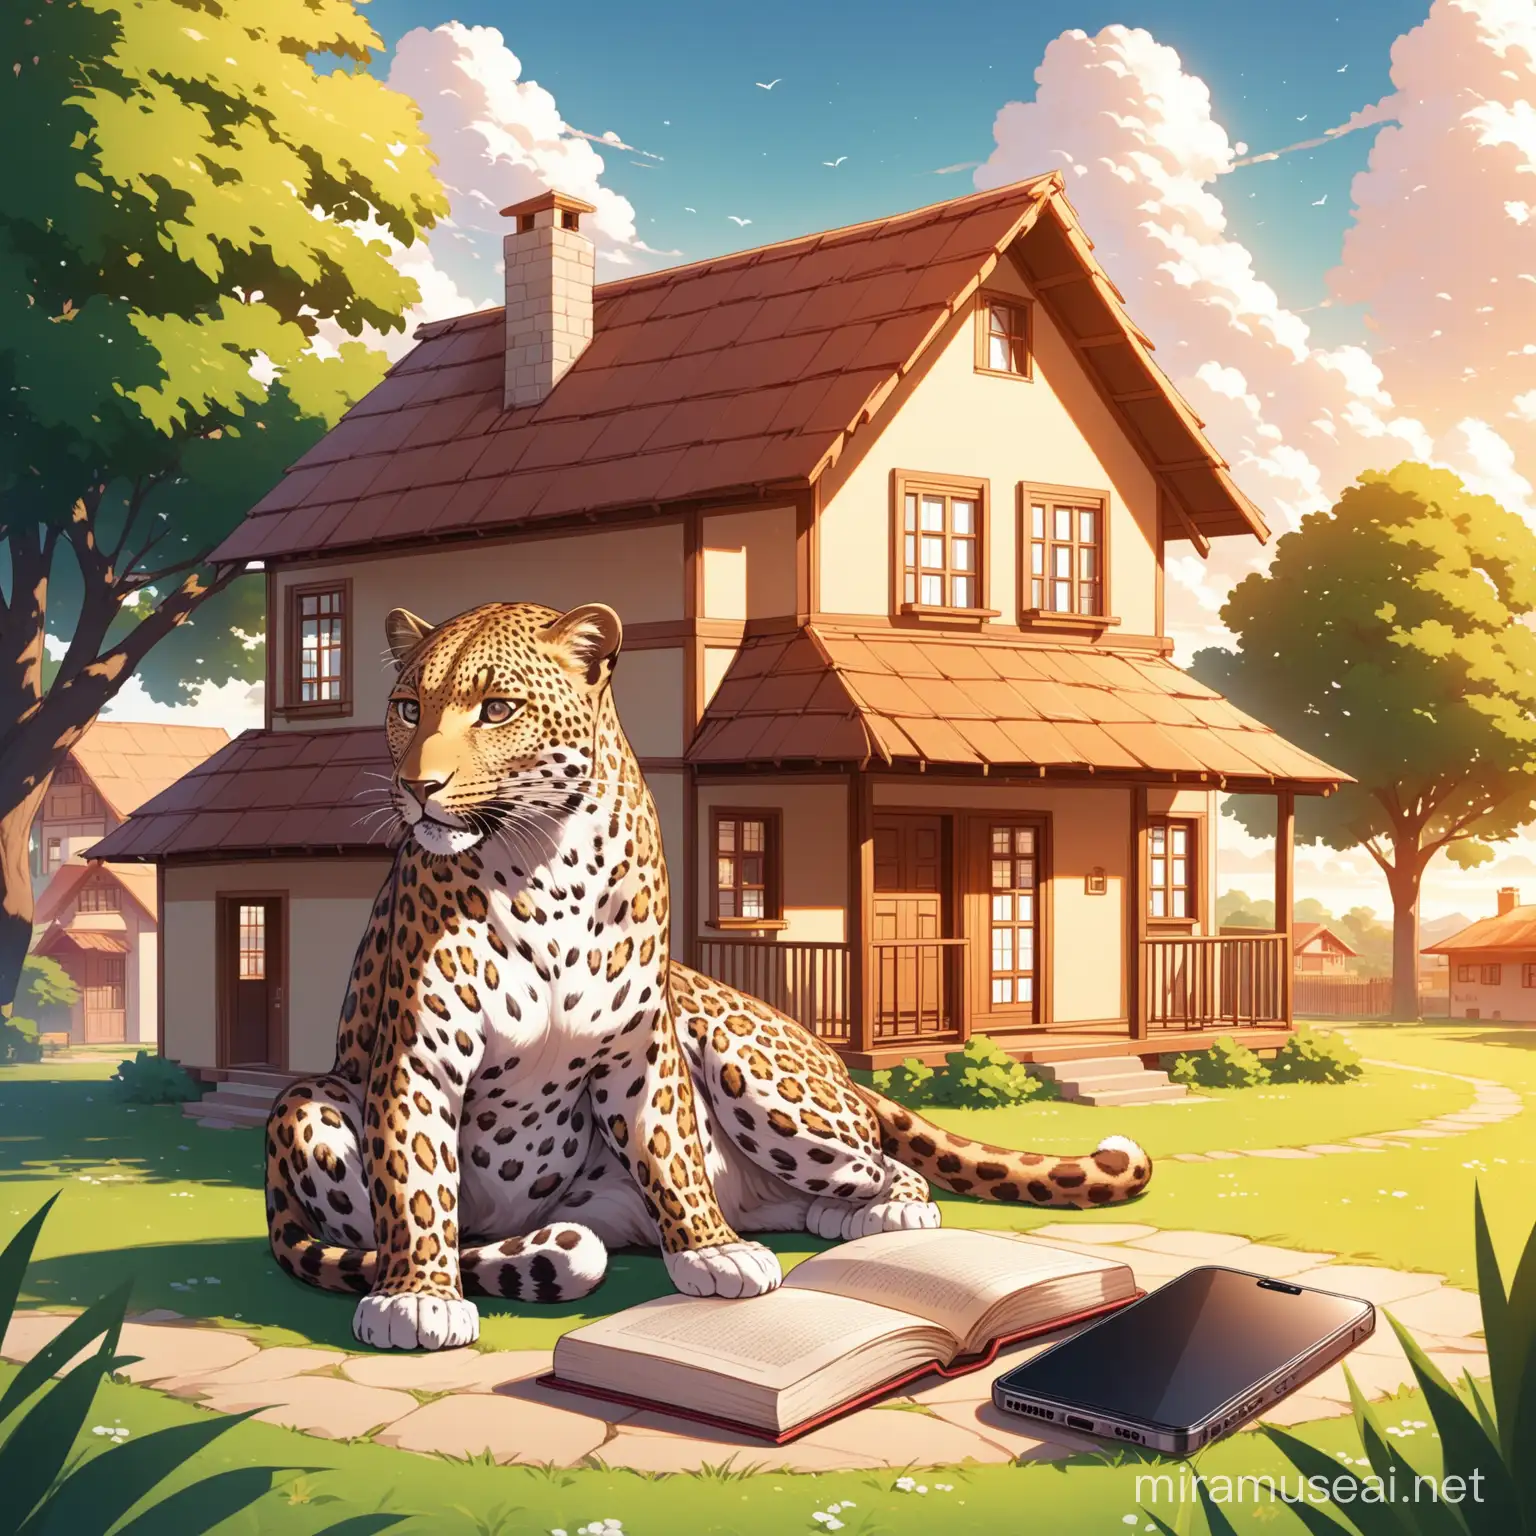 a leopard, a house, a phone, a book